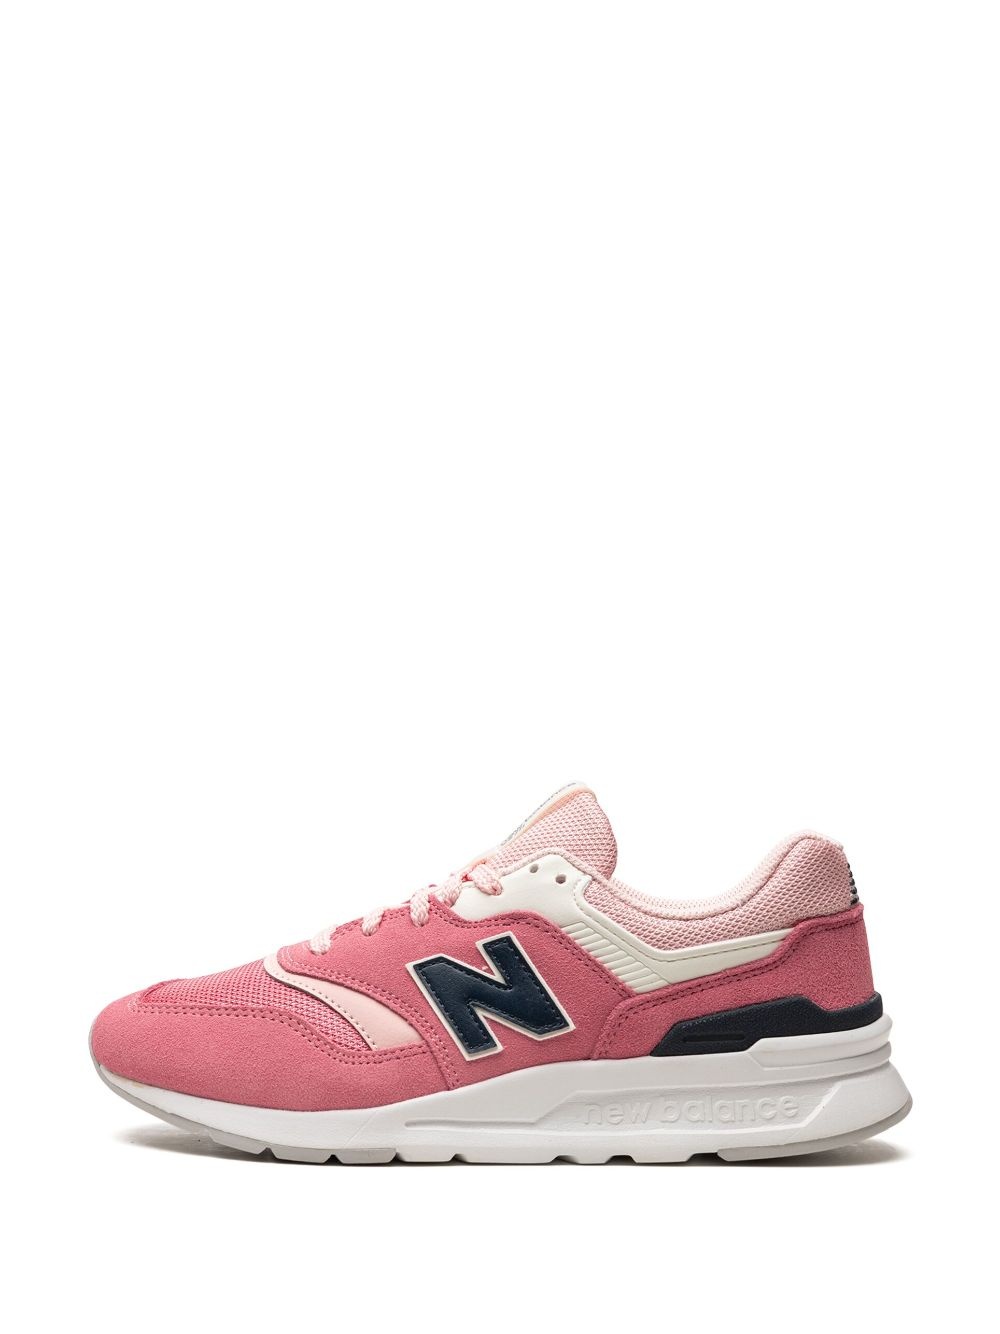 997 "Pink Haze/White" sneakers - 5